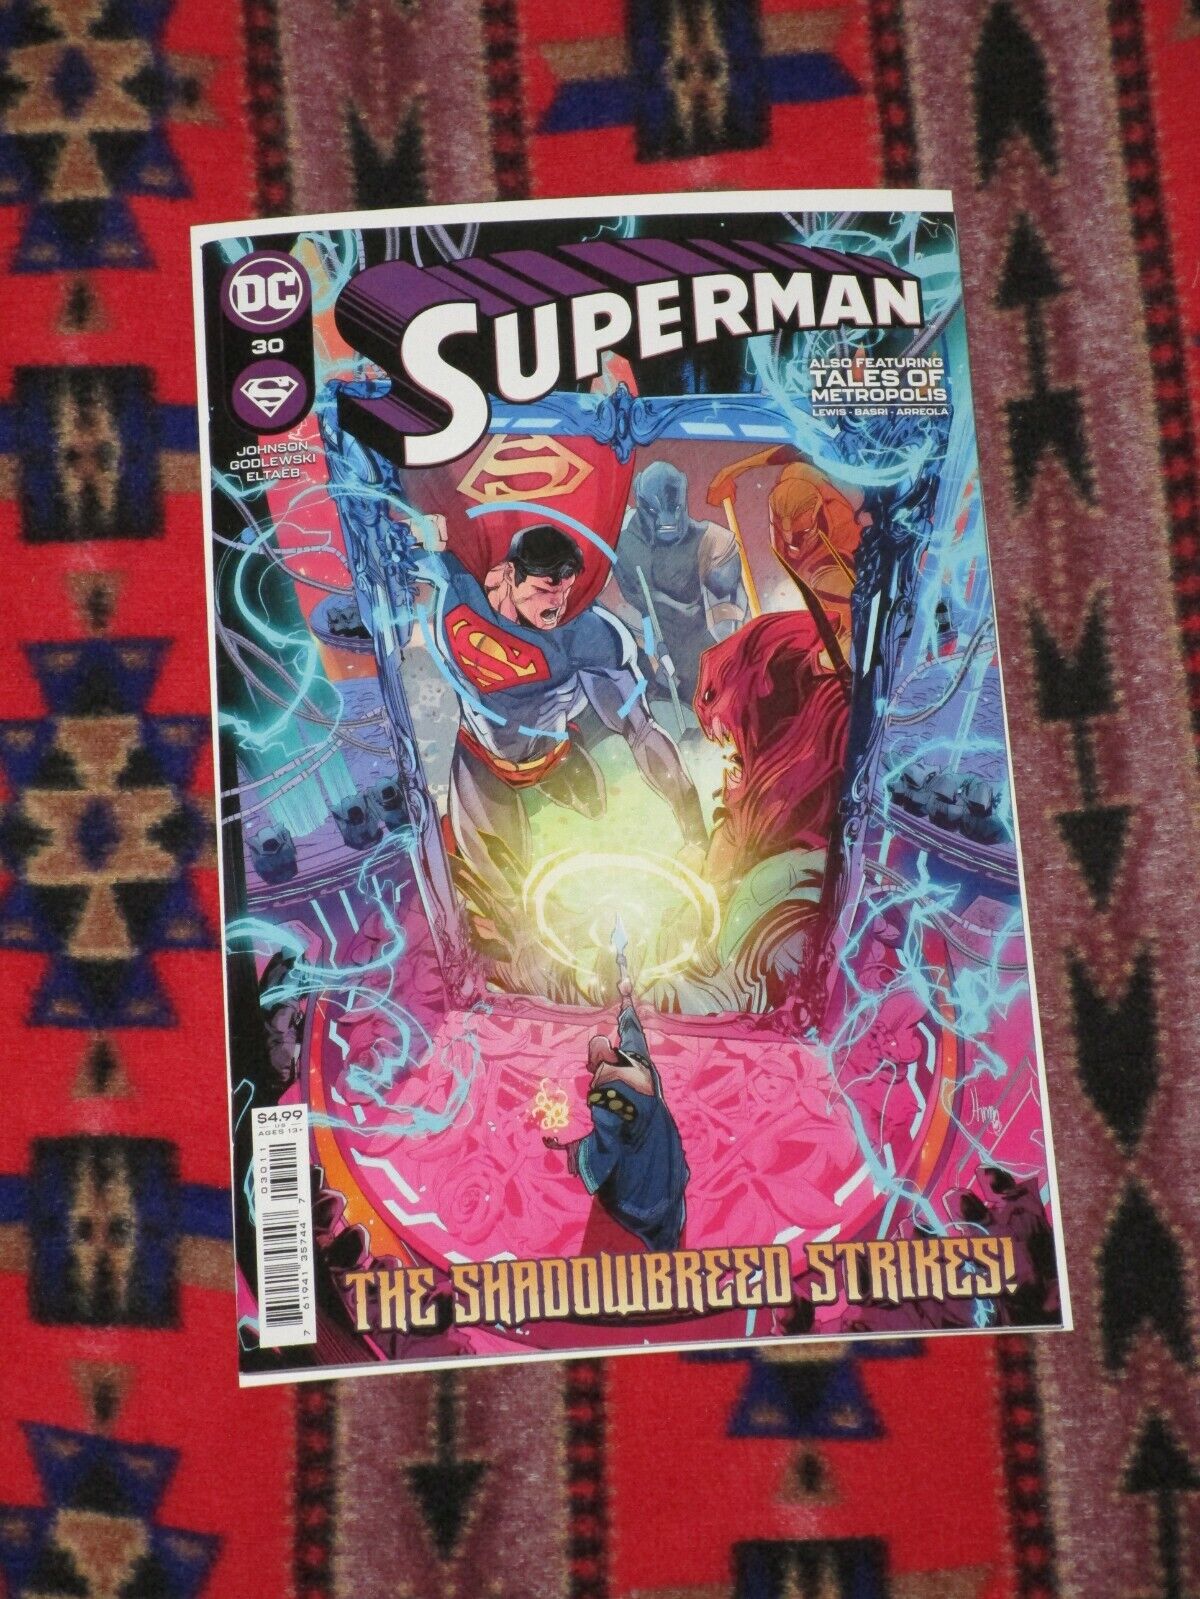 Superman #30 June 2021 (Contains 2 Stories)